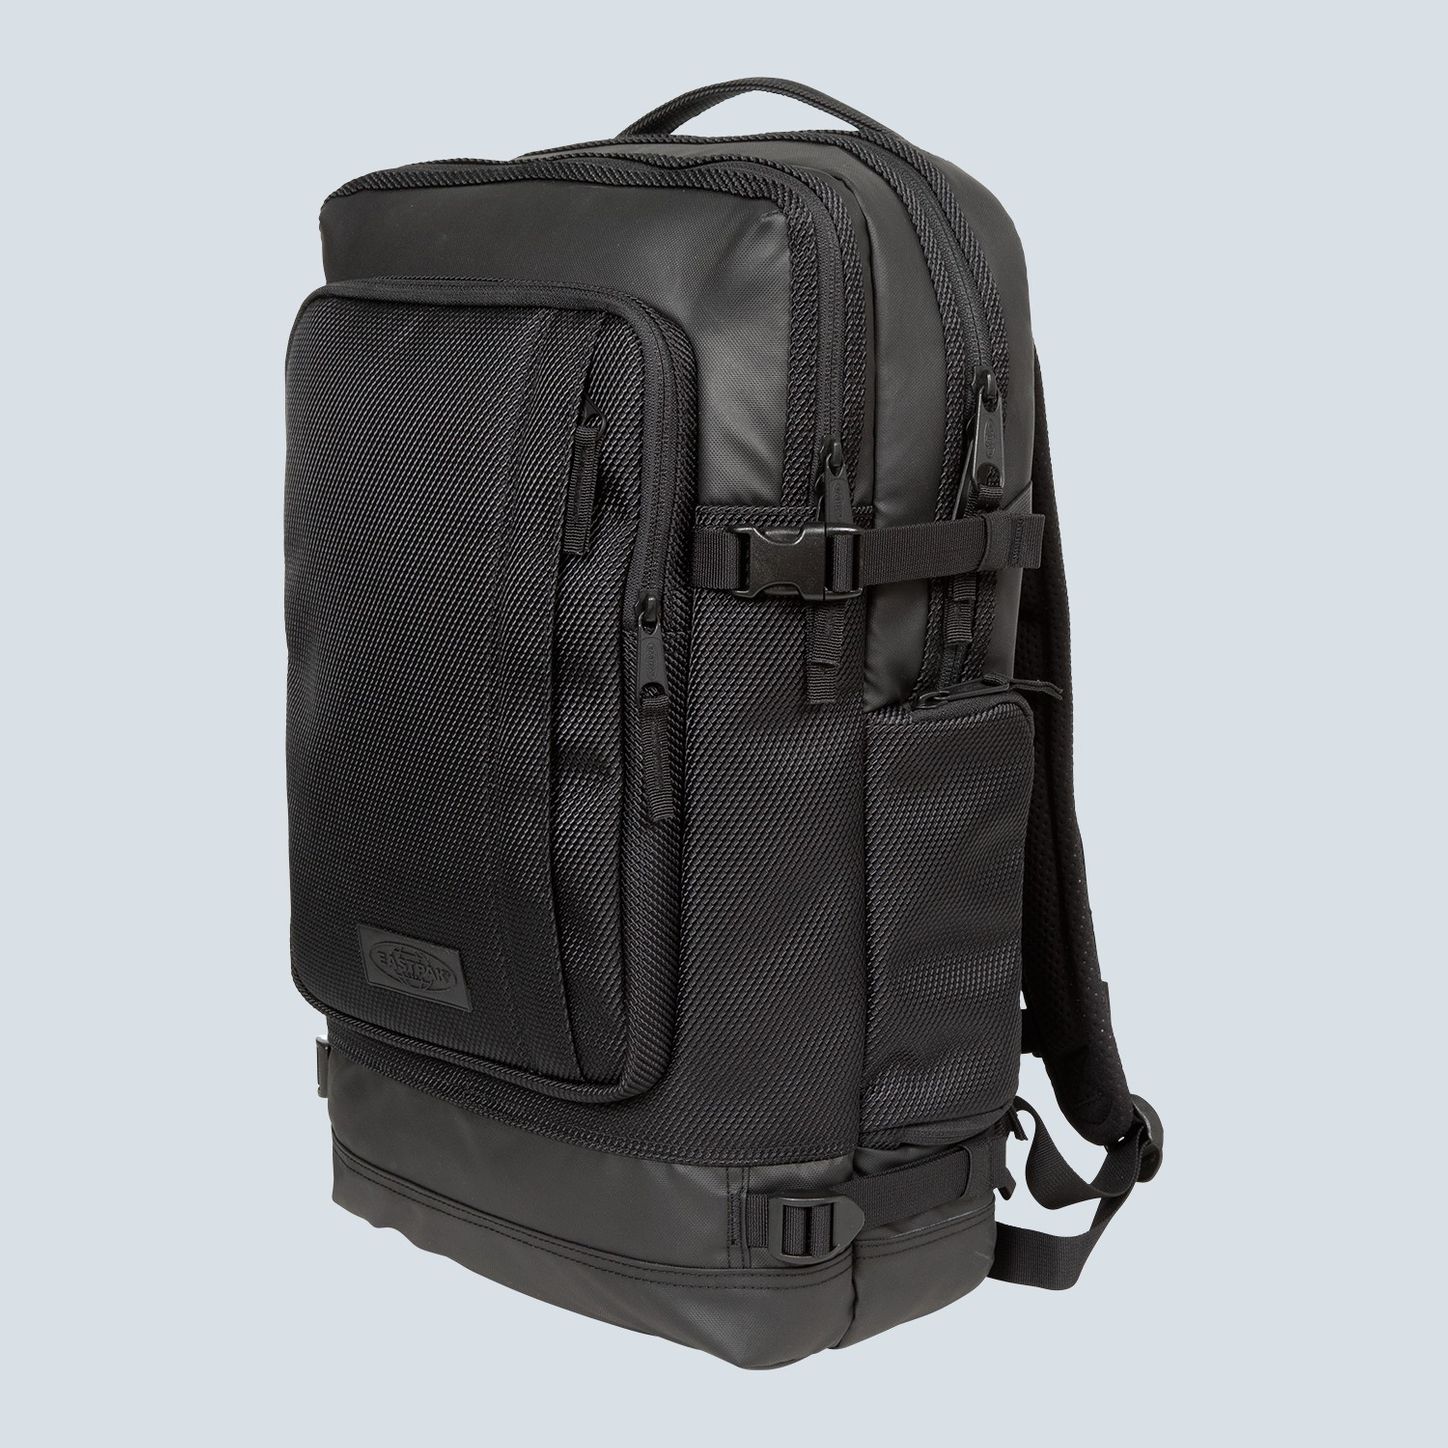 Color : Black , Size : 431030cm Travel Laptop Backpack Backpacks For Men Laptop Backpack School Rucksack Business Casual Hiking Travel Daypack Black Slim Durable Laptops Backpack Water Resistant 